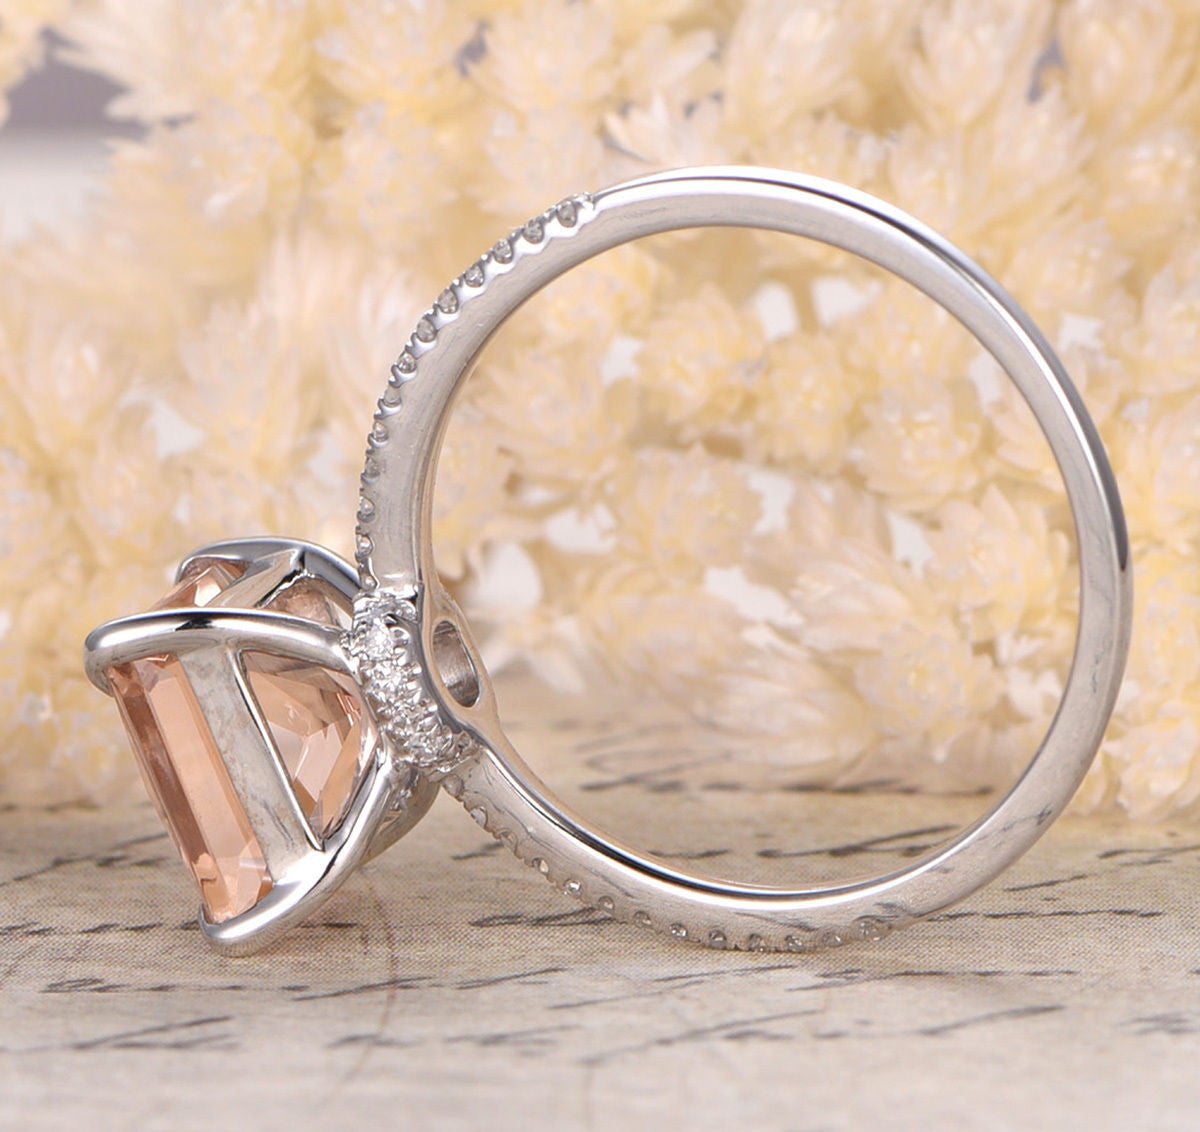 Princess Morganite Engagement Ring Pave Diamond Wedding 14K White Gold 8mm - Lord of Gem Rings - 4